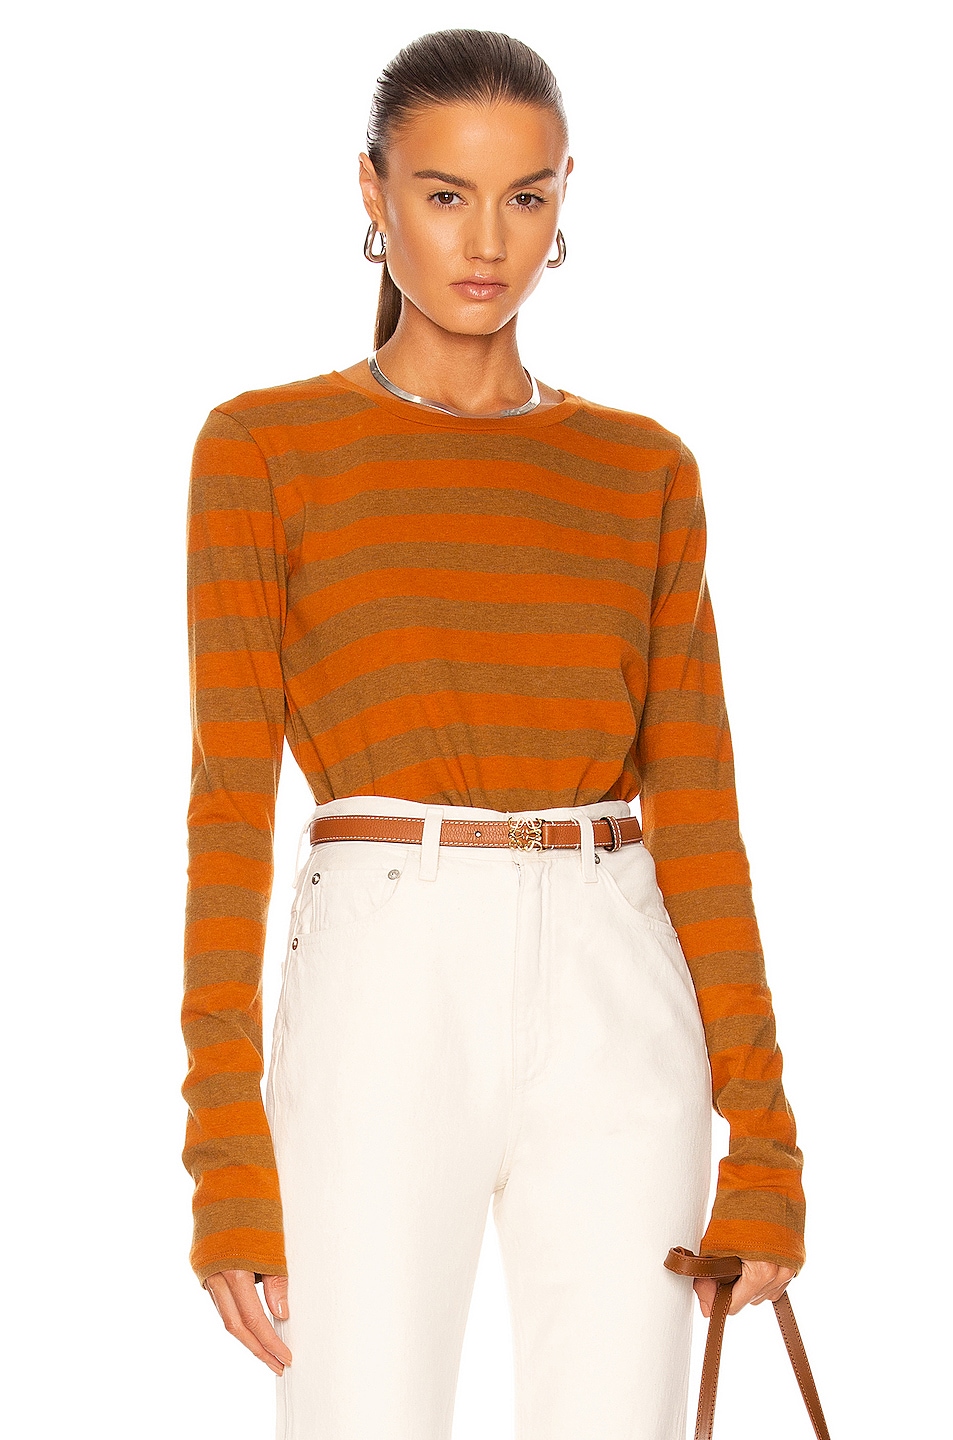 NILI LOTAN Long Sleeve Shirt in Khaki & Orange Stripe | FWRD